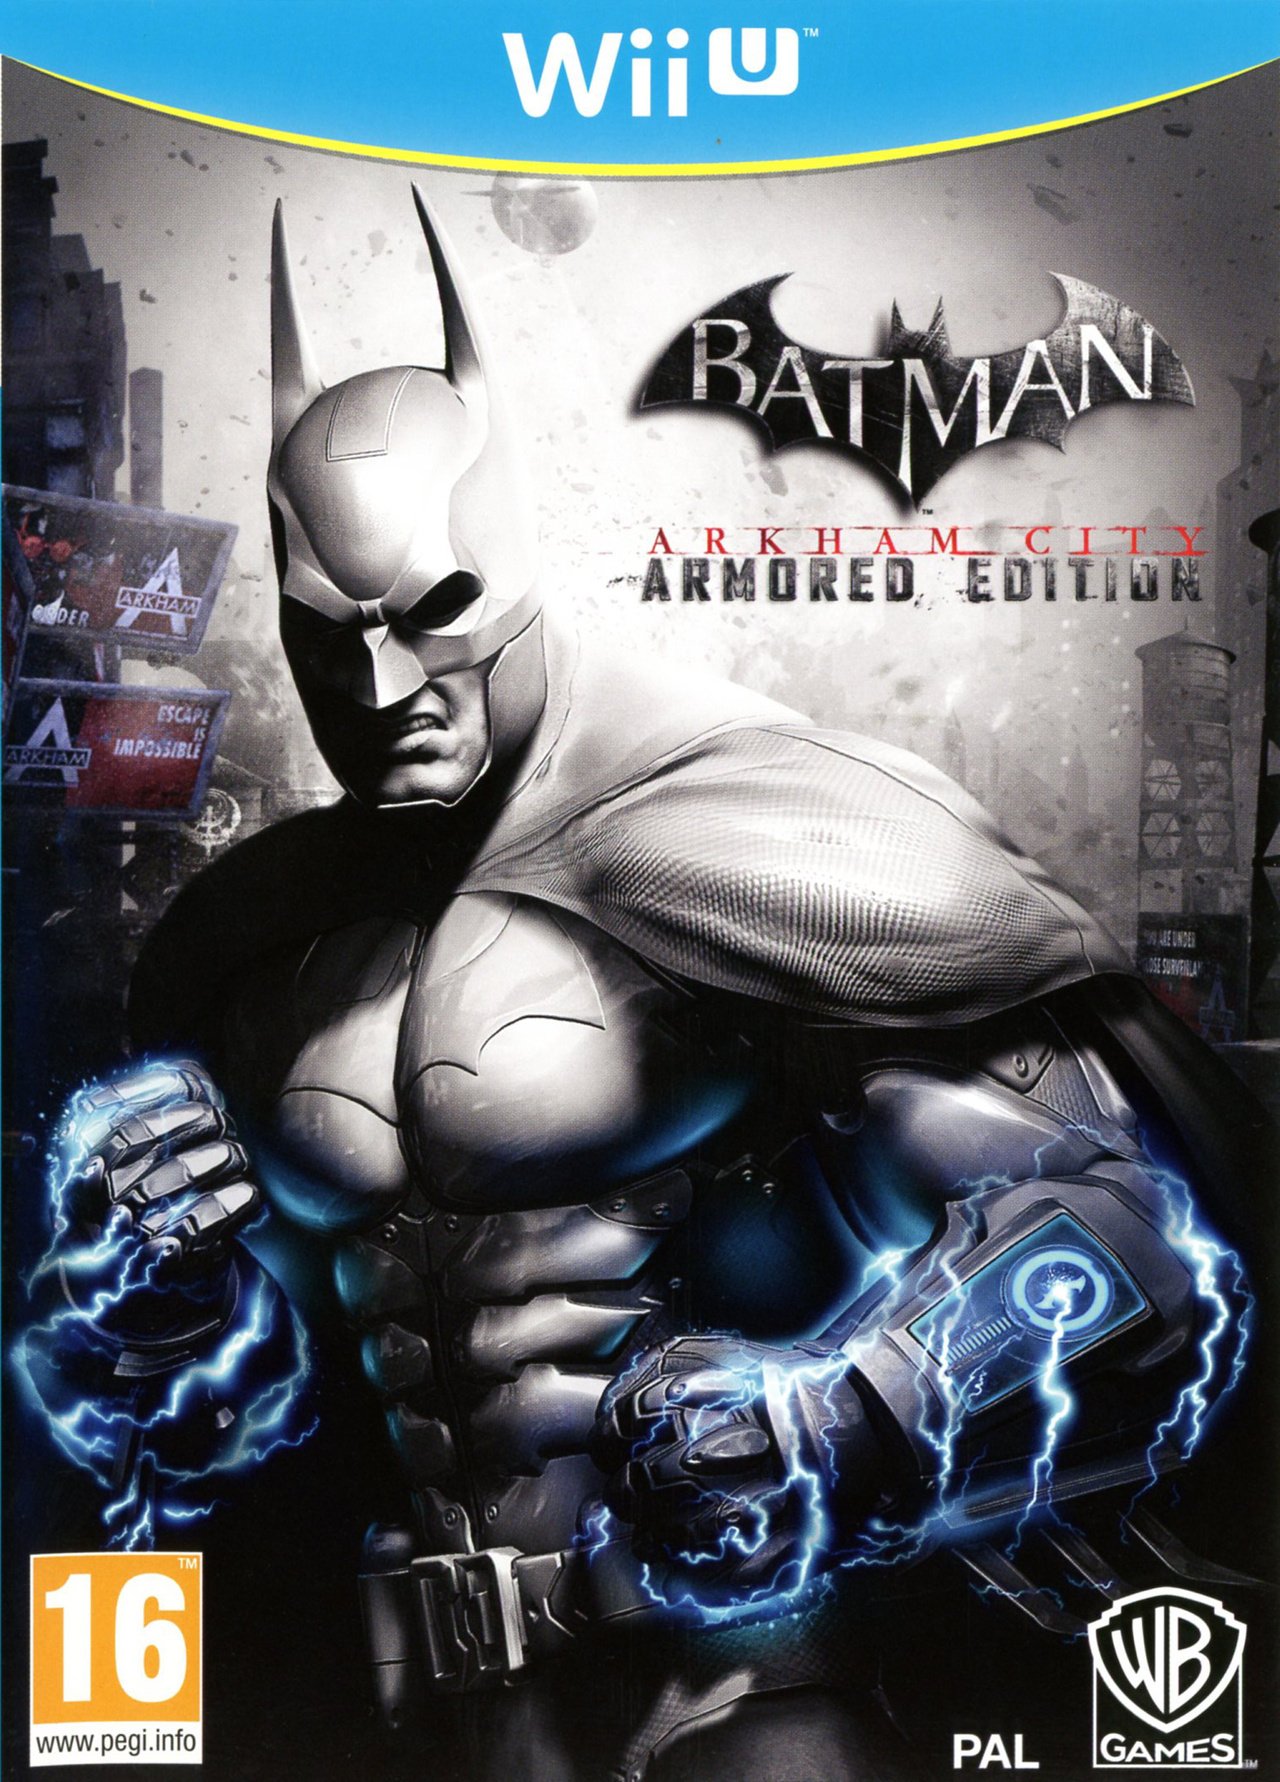 Caratula de Batman Arkham City Armored Edition para Wii U